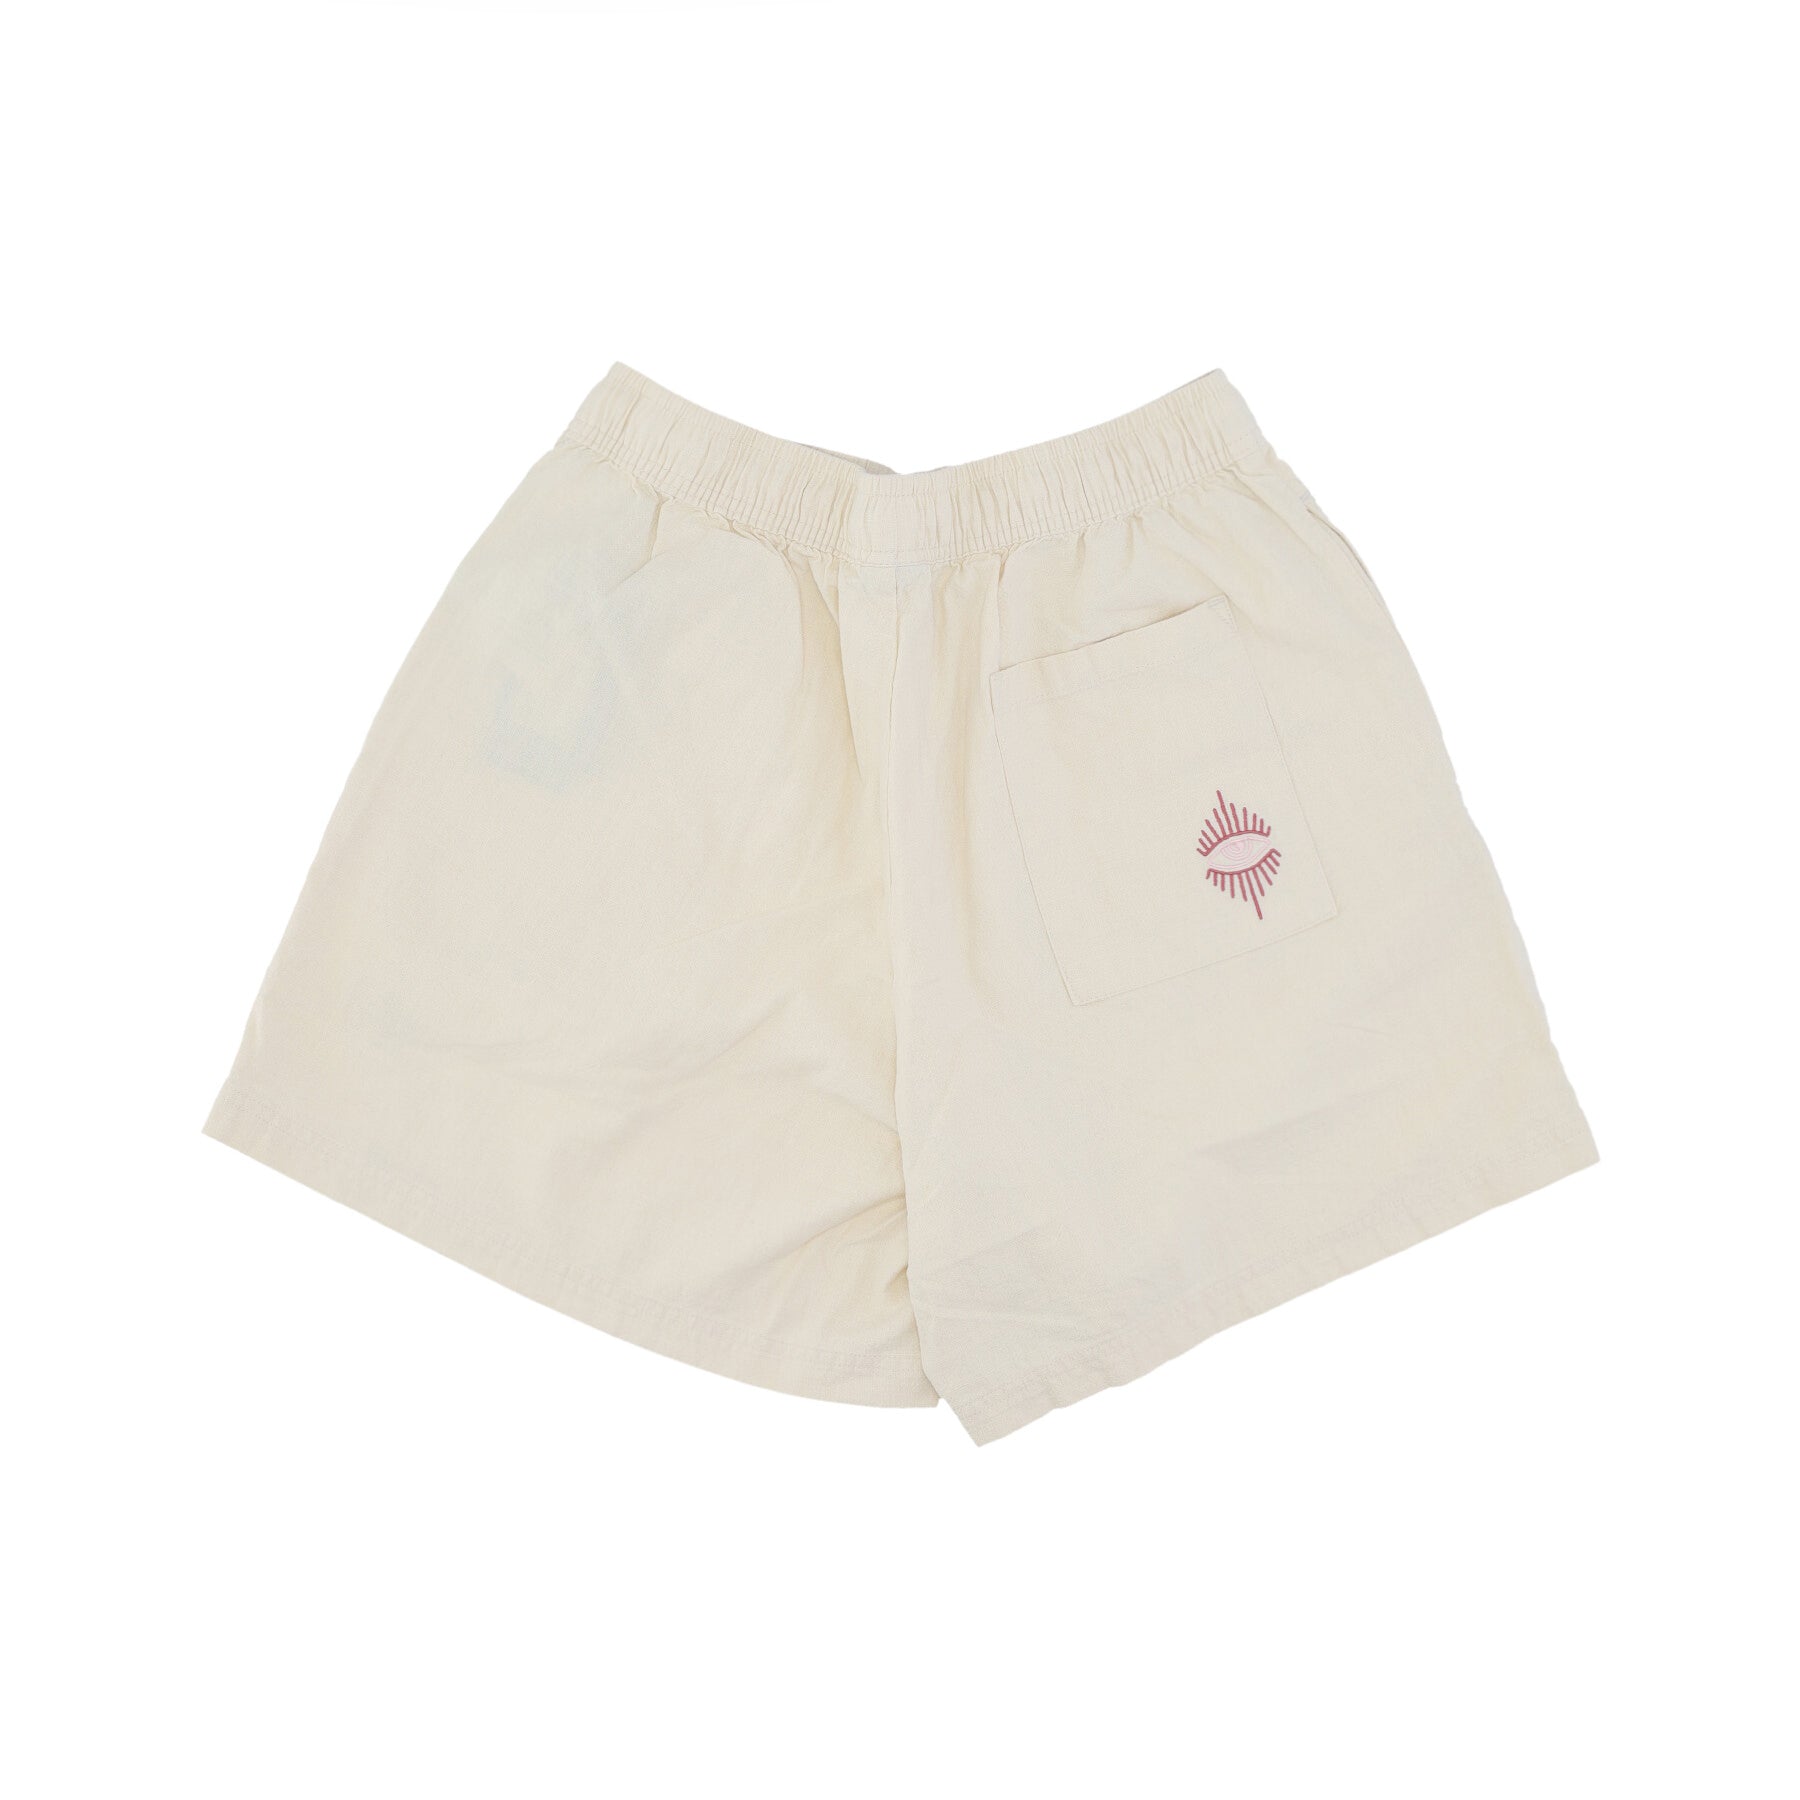 Pantalone Corto Donna Scatter Shorts Off White SCA-WSH-0304